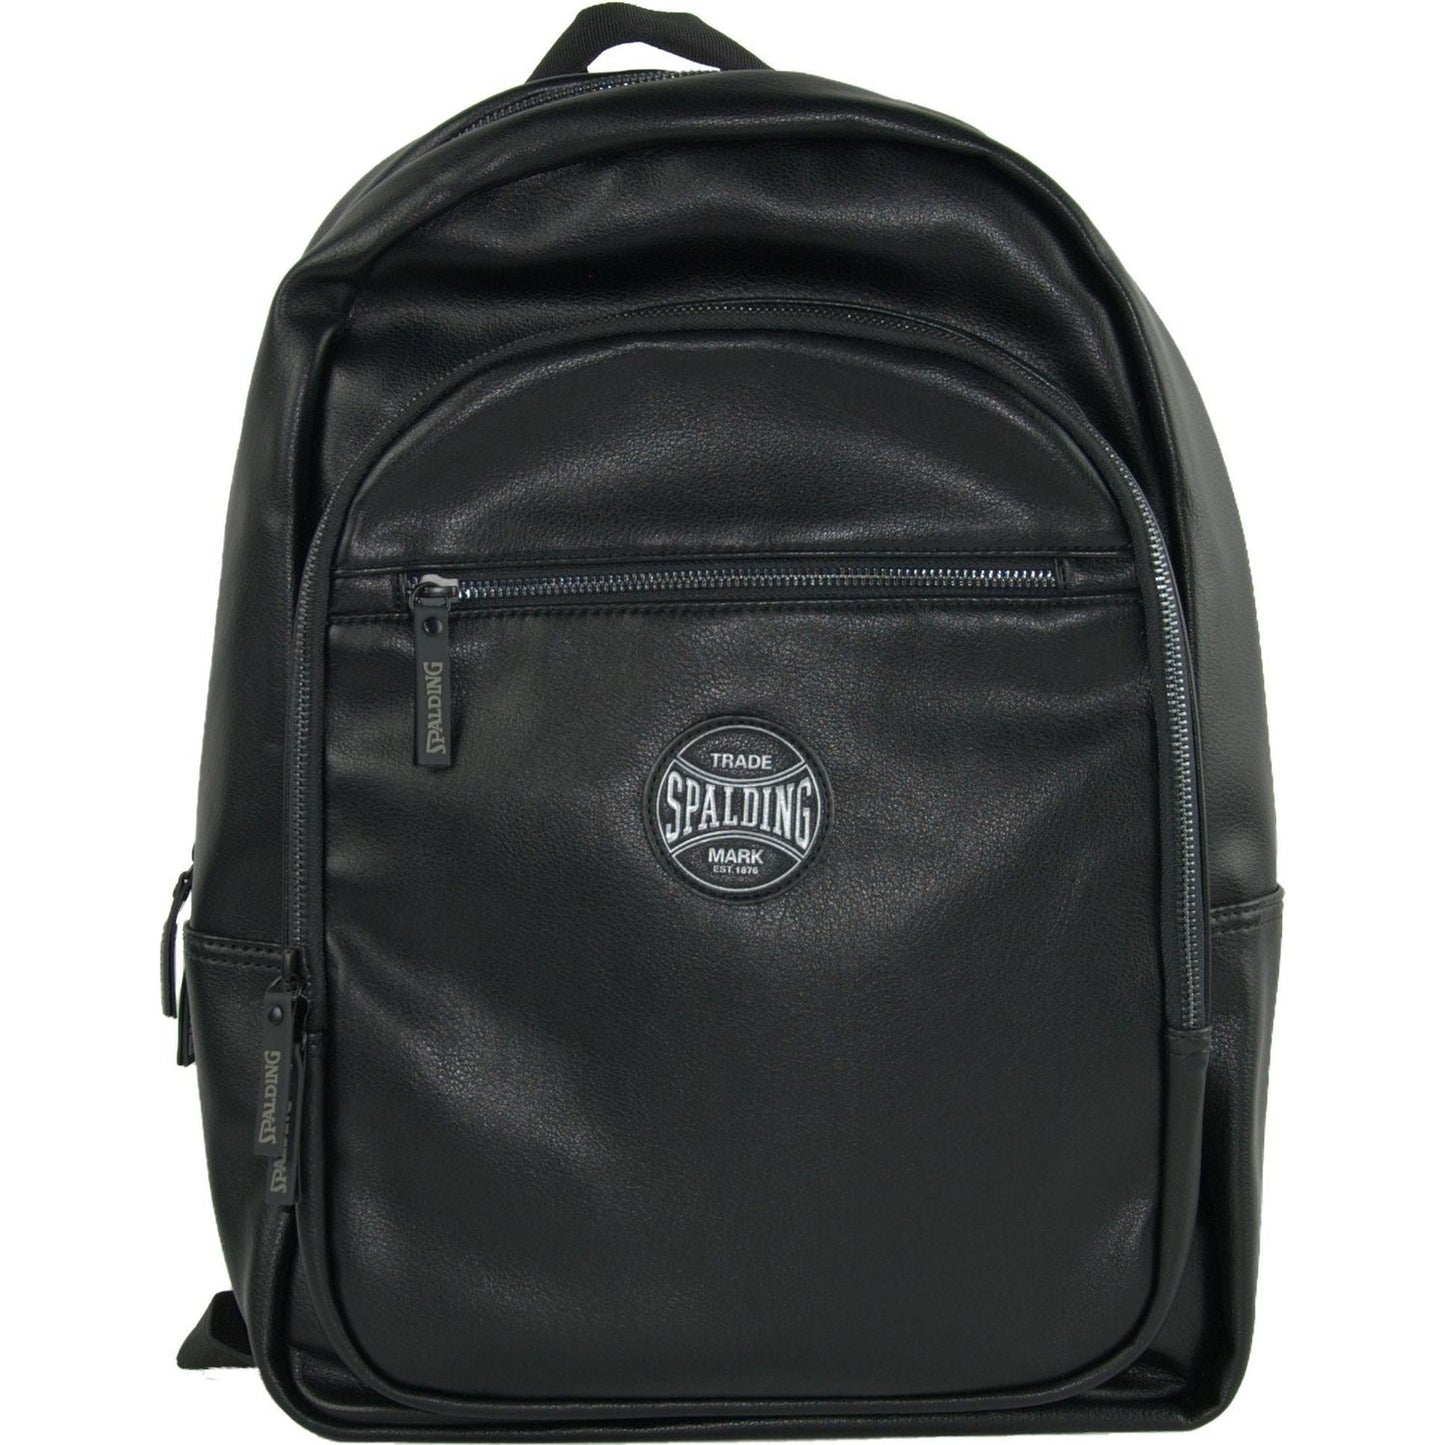 A.G. Spalding & Bros Sleek Black Pro Backpack For Men black-polyurethane-backpack-1 stock_product_image_748_1955059726-74096f7b-478.jpg